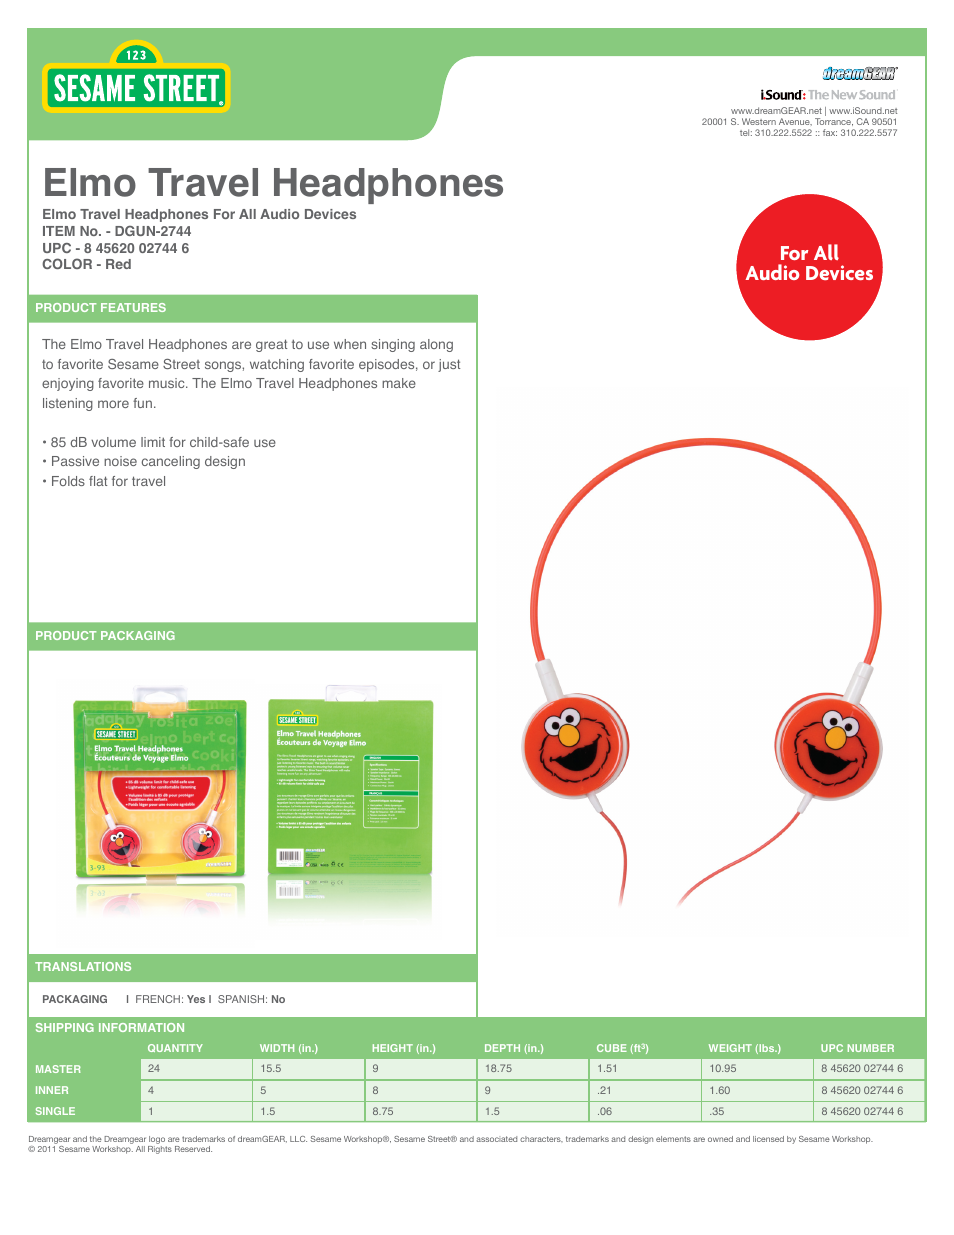 Elmo Travel Headphones - Sell Sheet